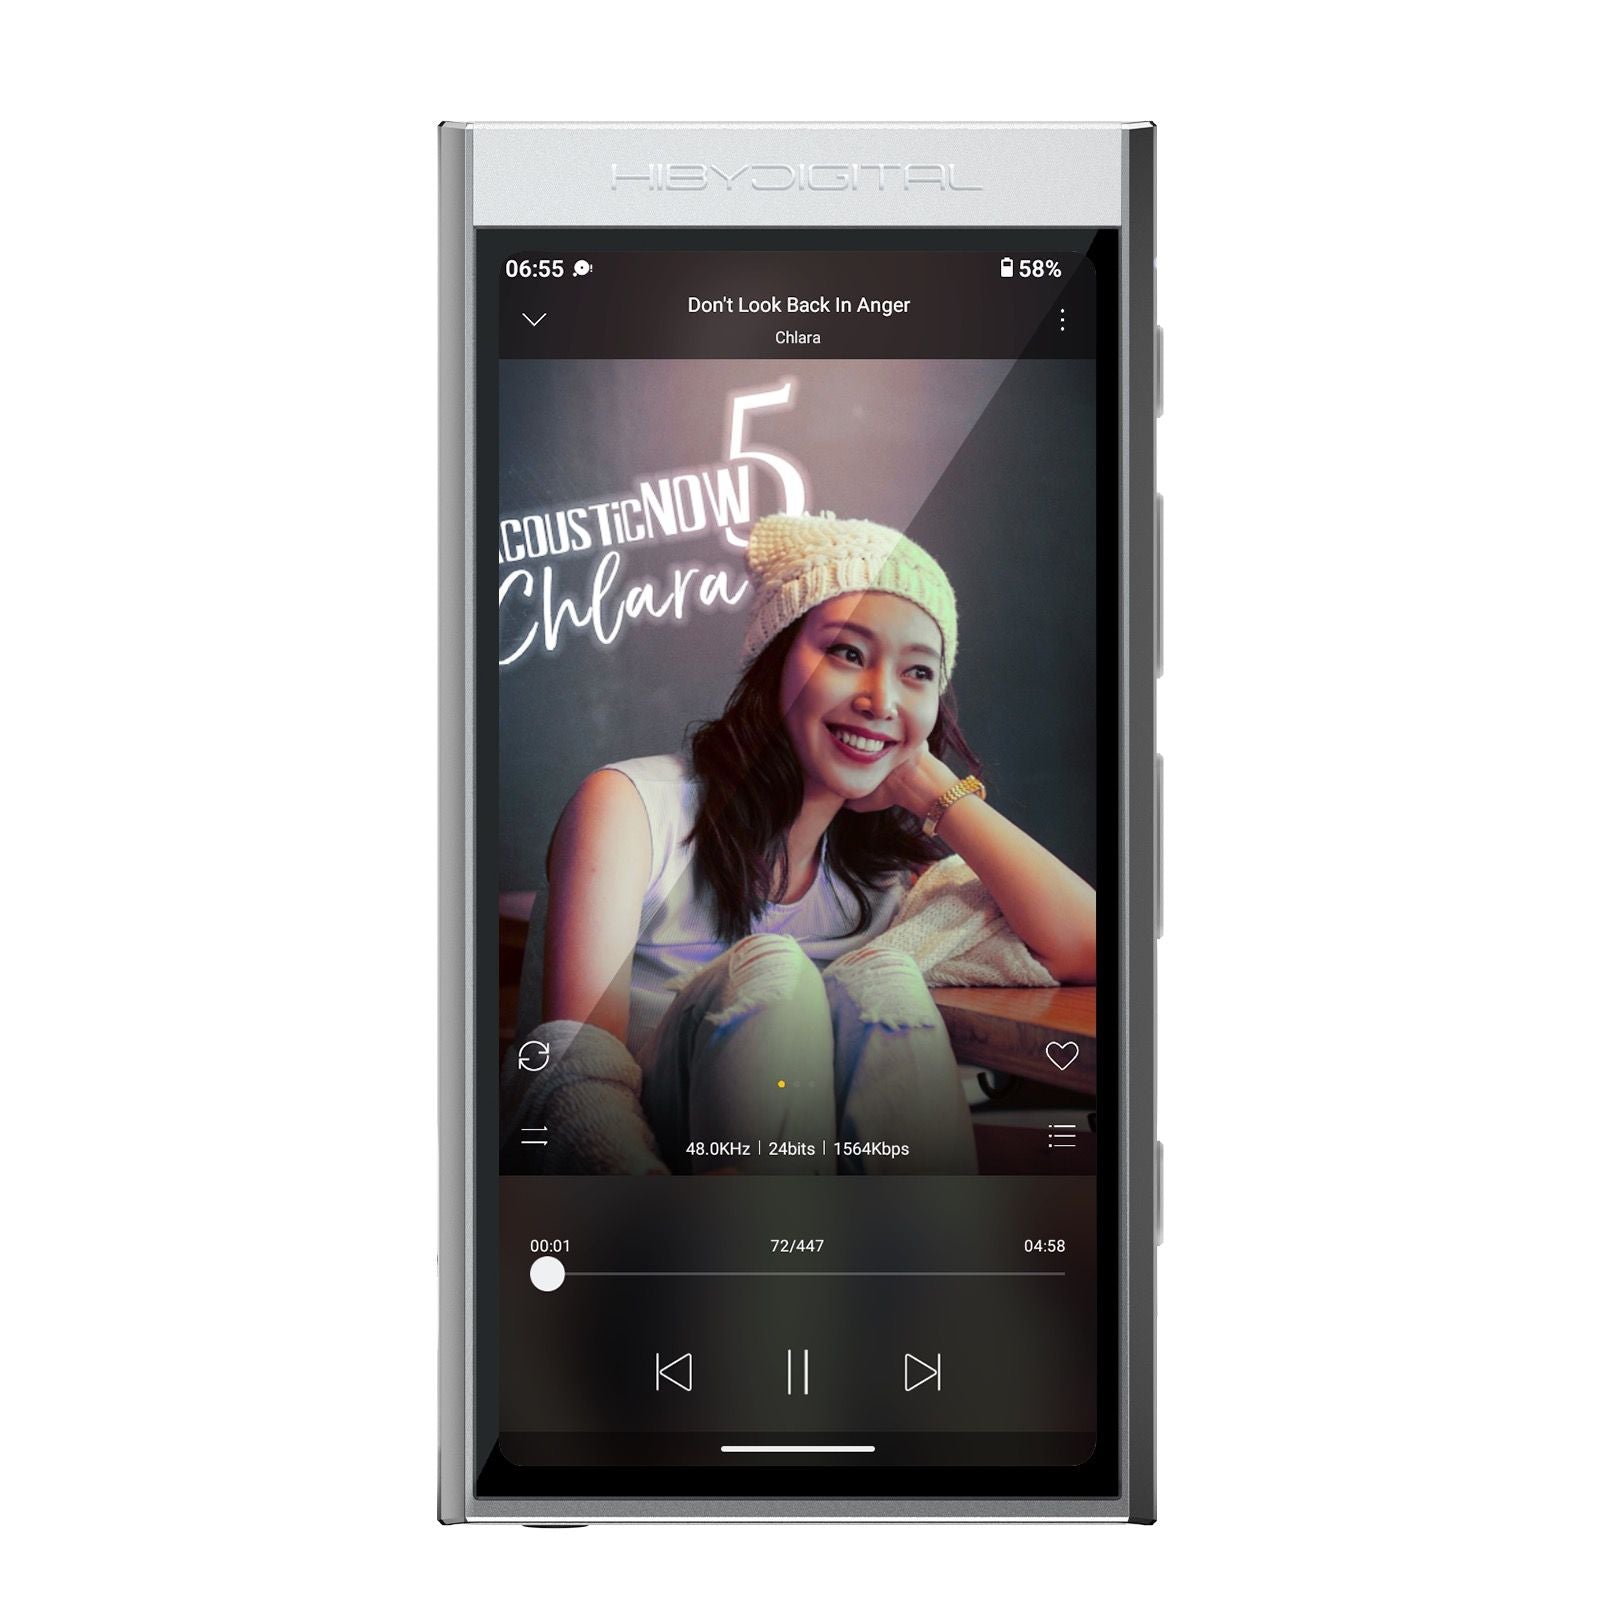 HiBy Digital M300 Portable Digital Lossless Audio Player